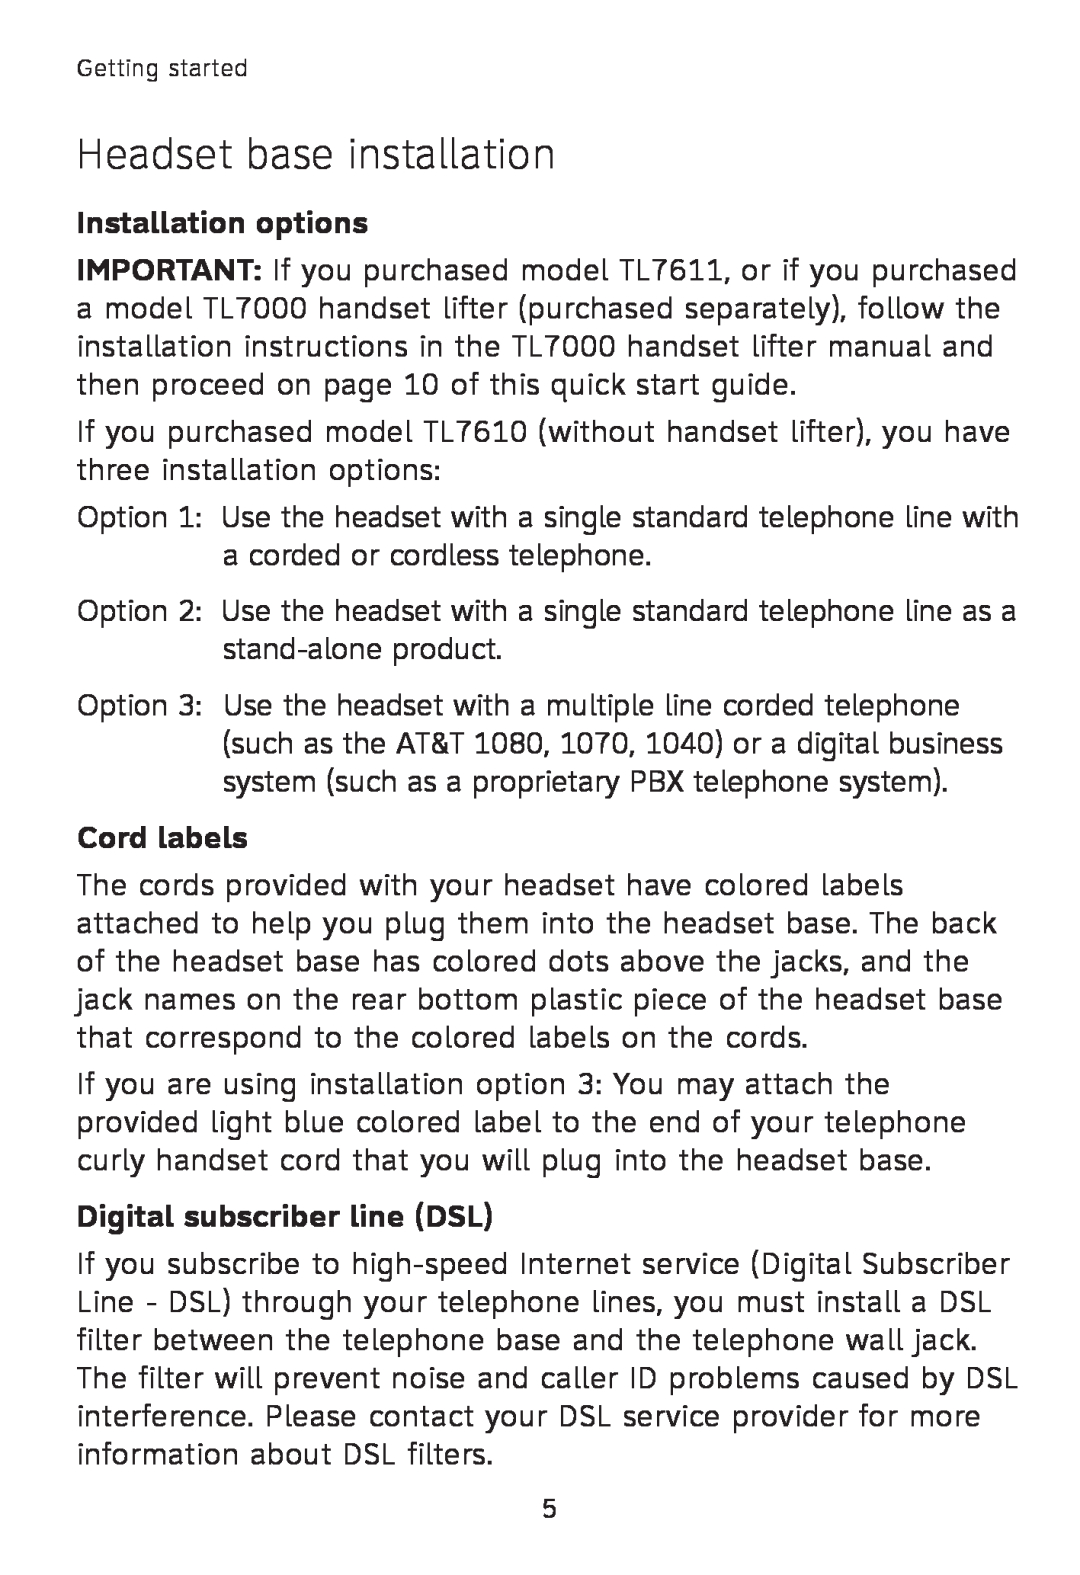 AT&T TL760 quick start Installation options, Cord labels, Digital subscriber line DSL, Headset base installation 